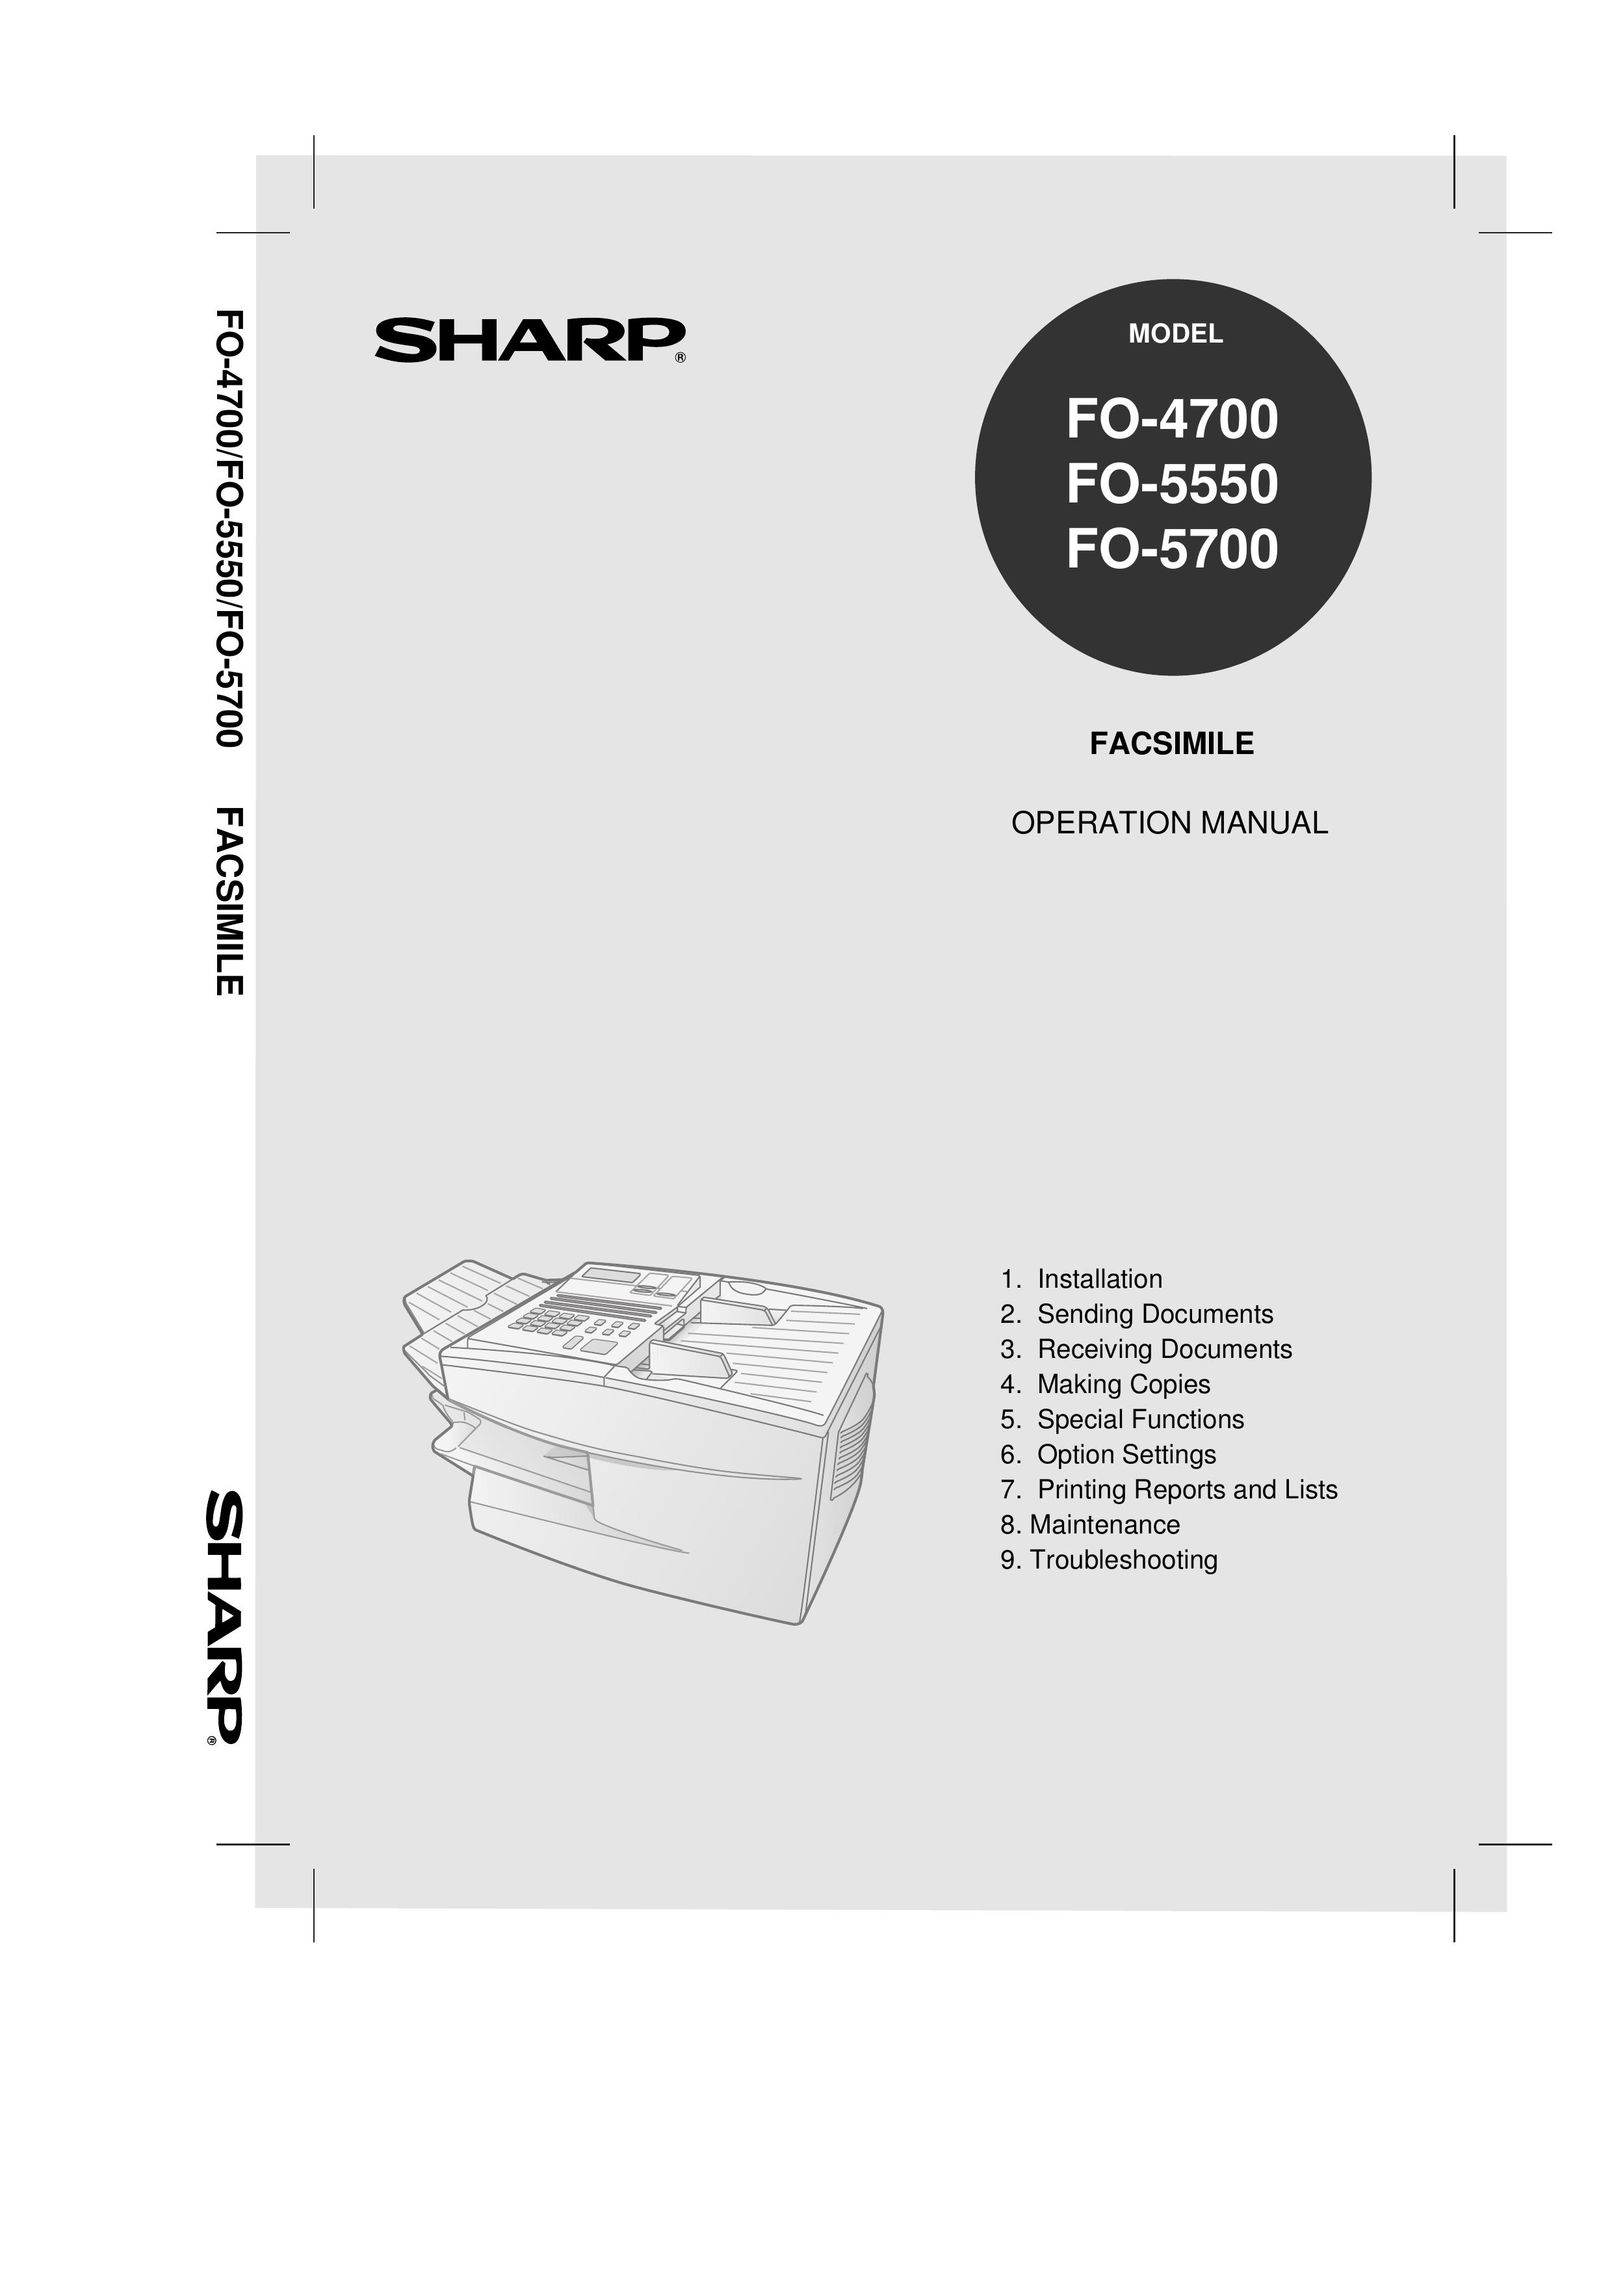 Sharp FO-5700 Fax Machine User Manual